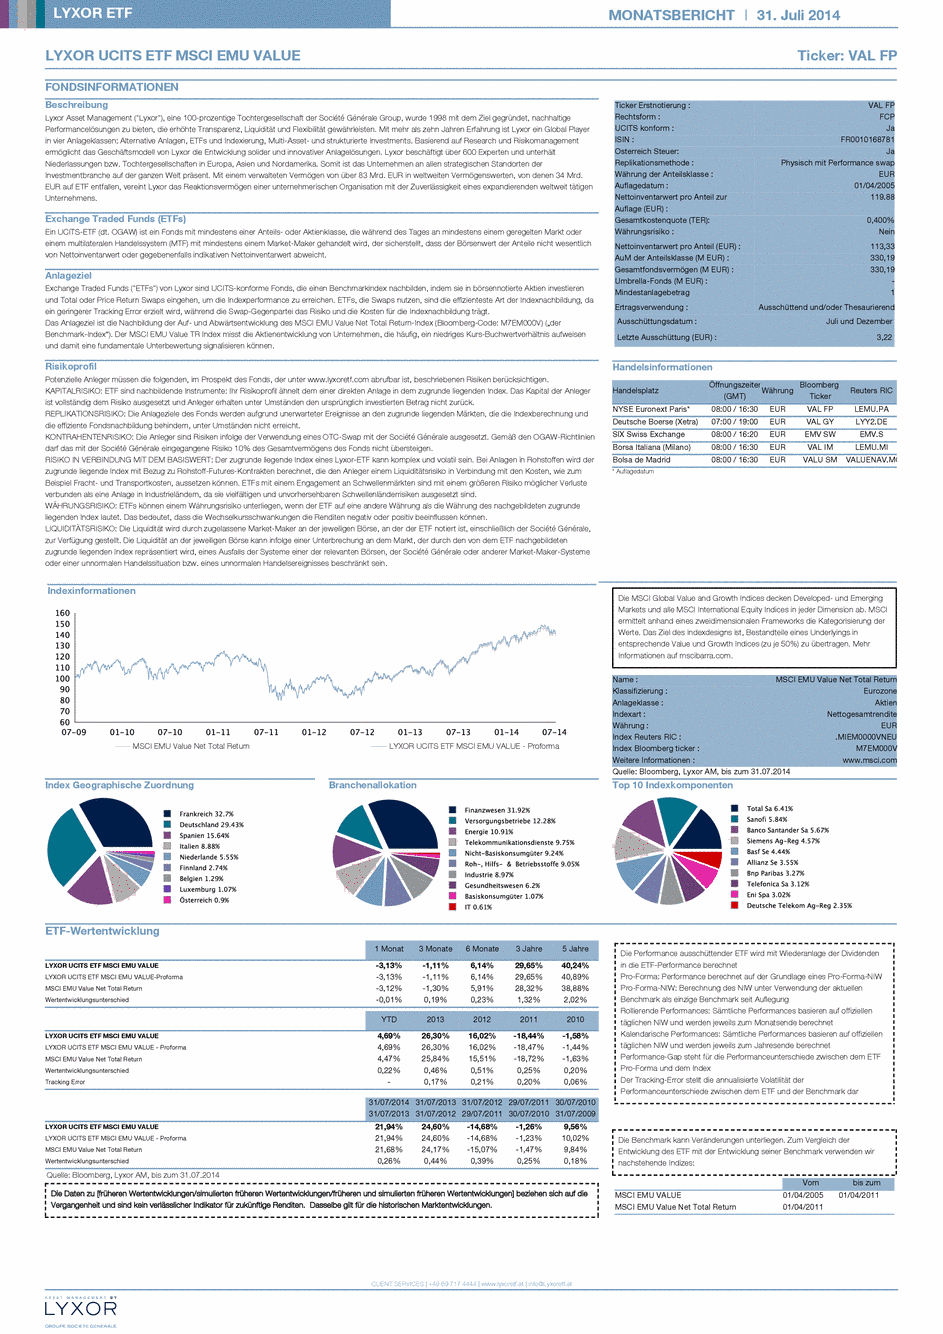 Reporting LYXOR UCITS ETF MSCI EMU VALUE - 31/07/2014 - German